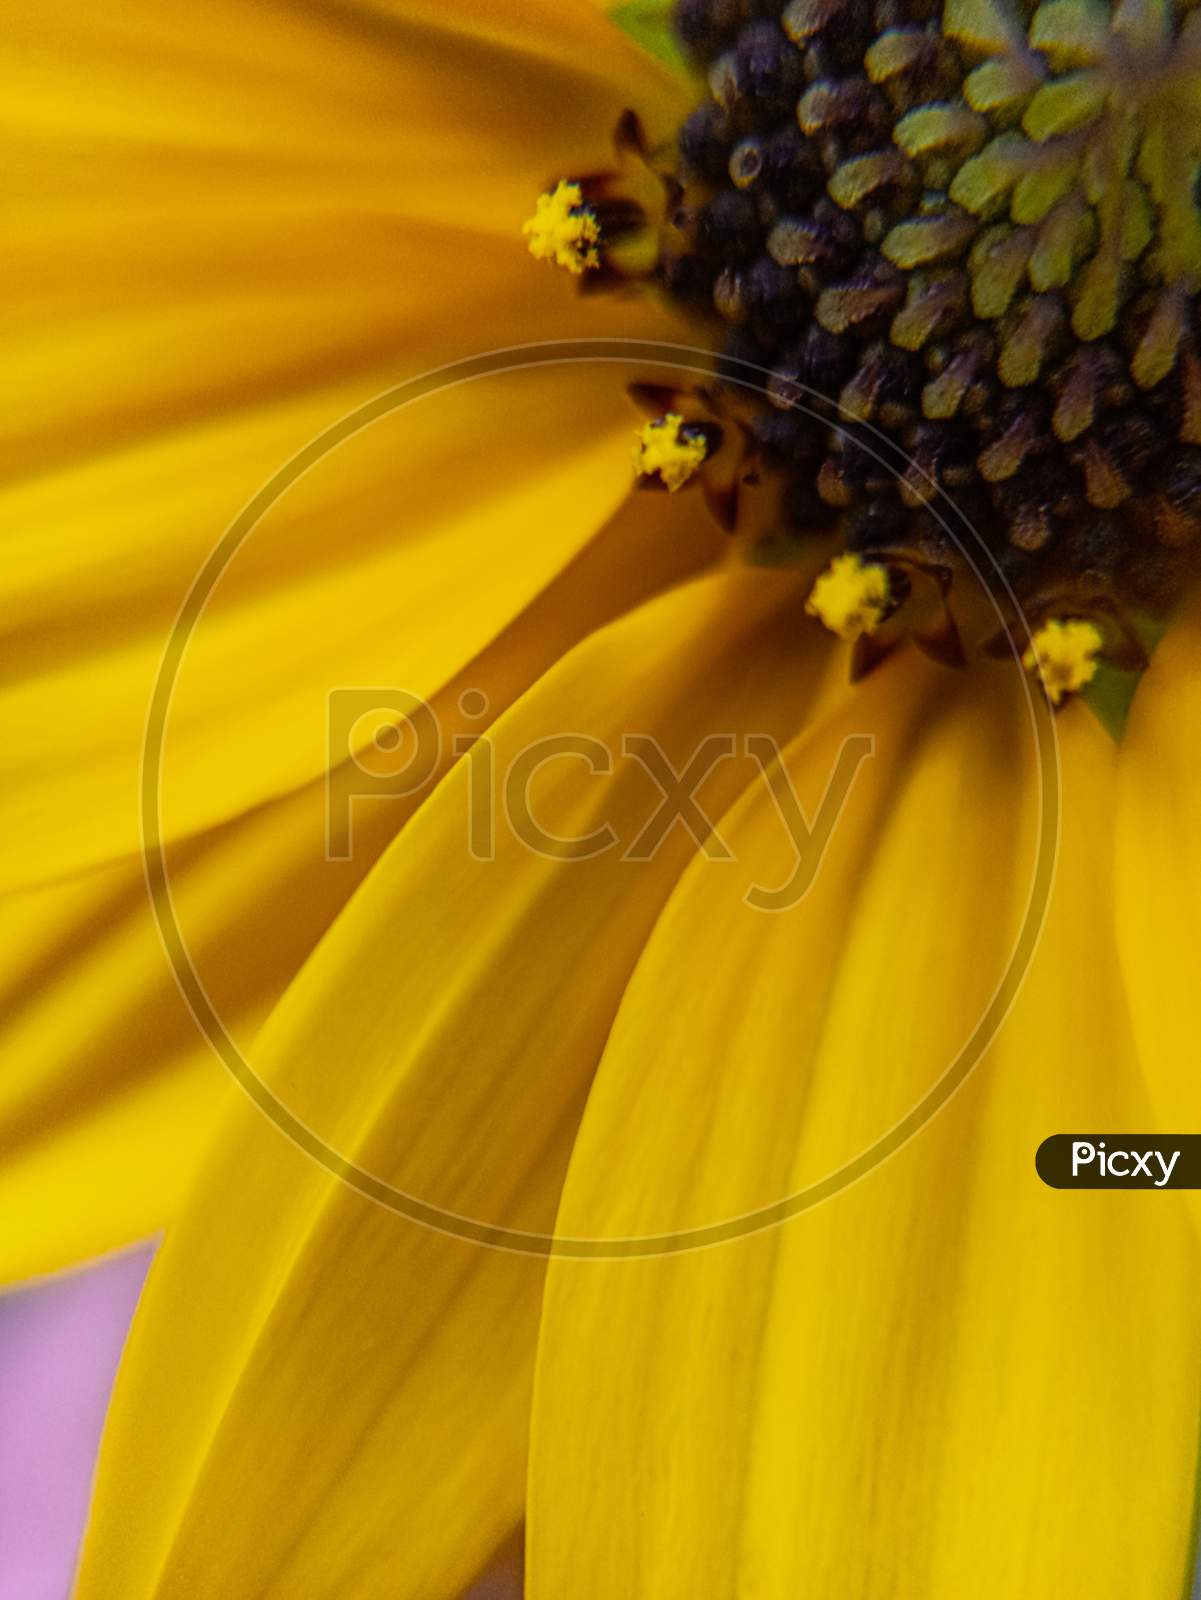 Detailed macro photos of sunflower.